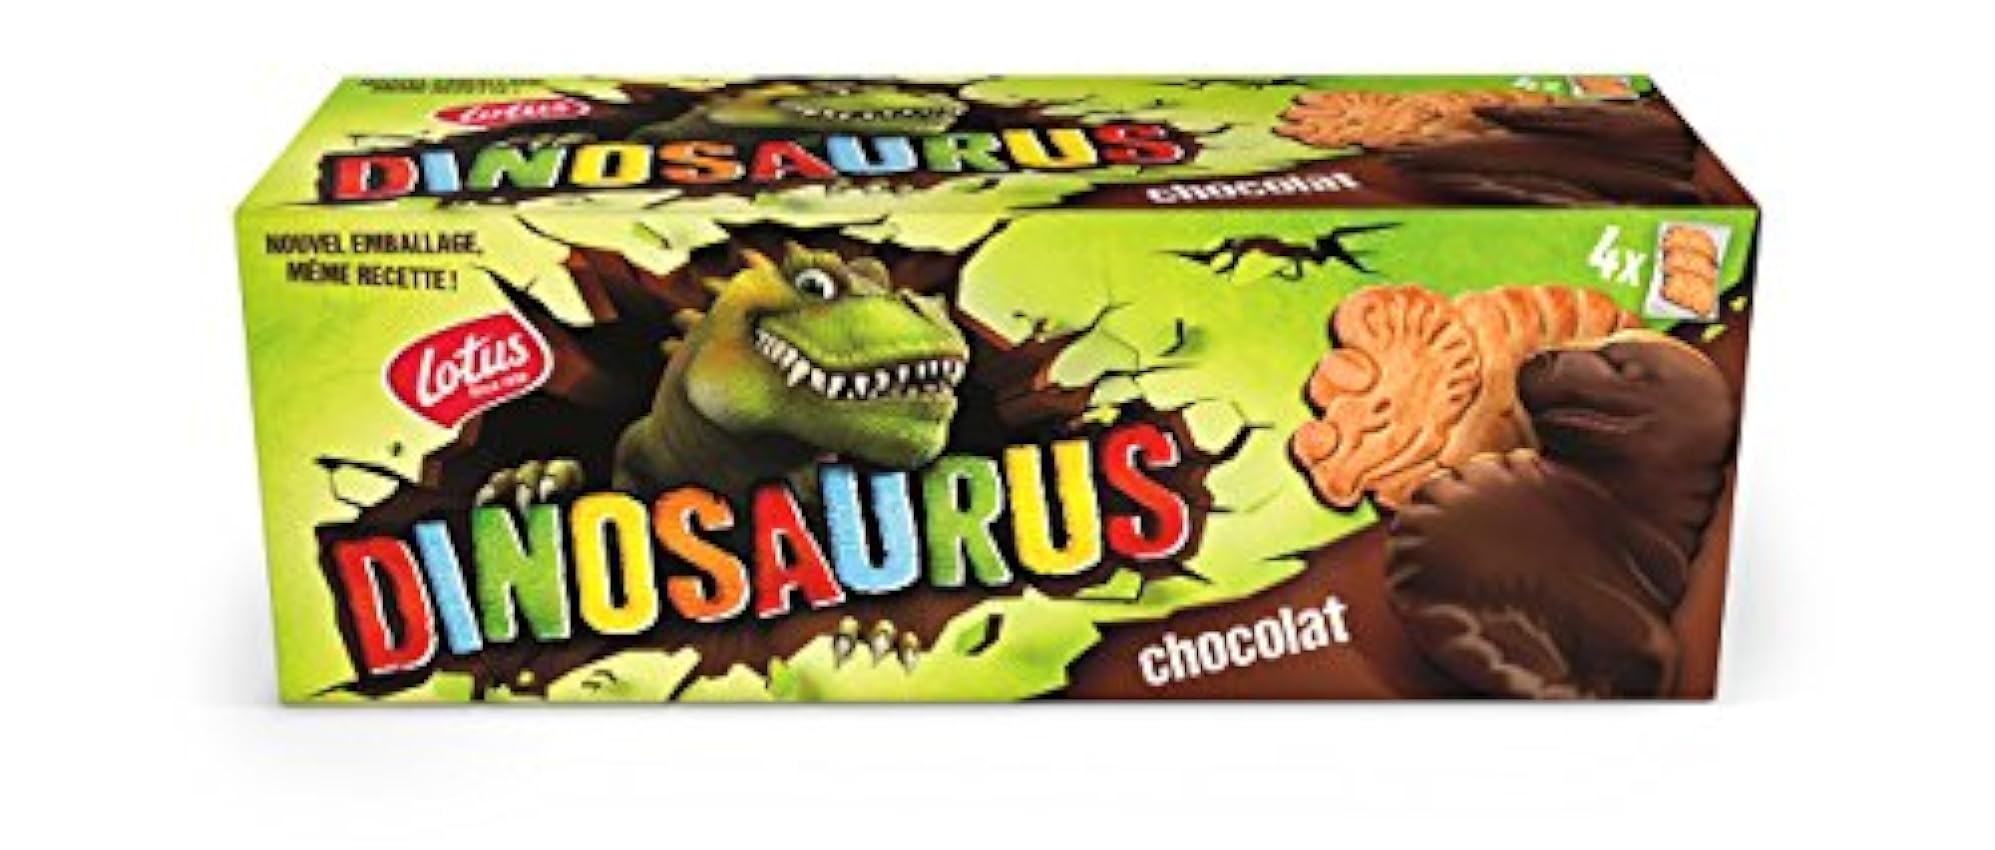 Lotus Dinosaurus au Chocolat, 225 g - Lot de 8 ohgO8aha